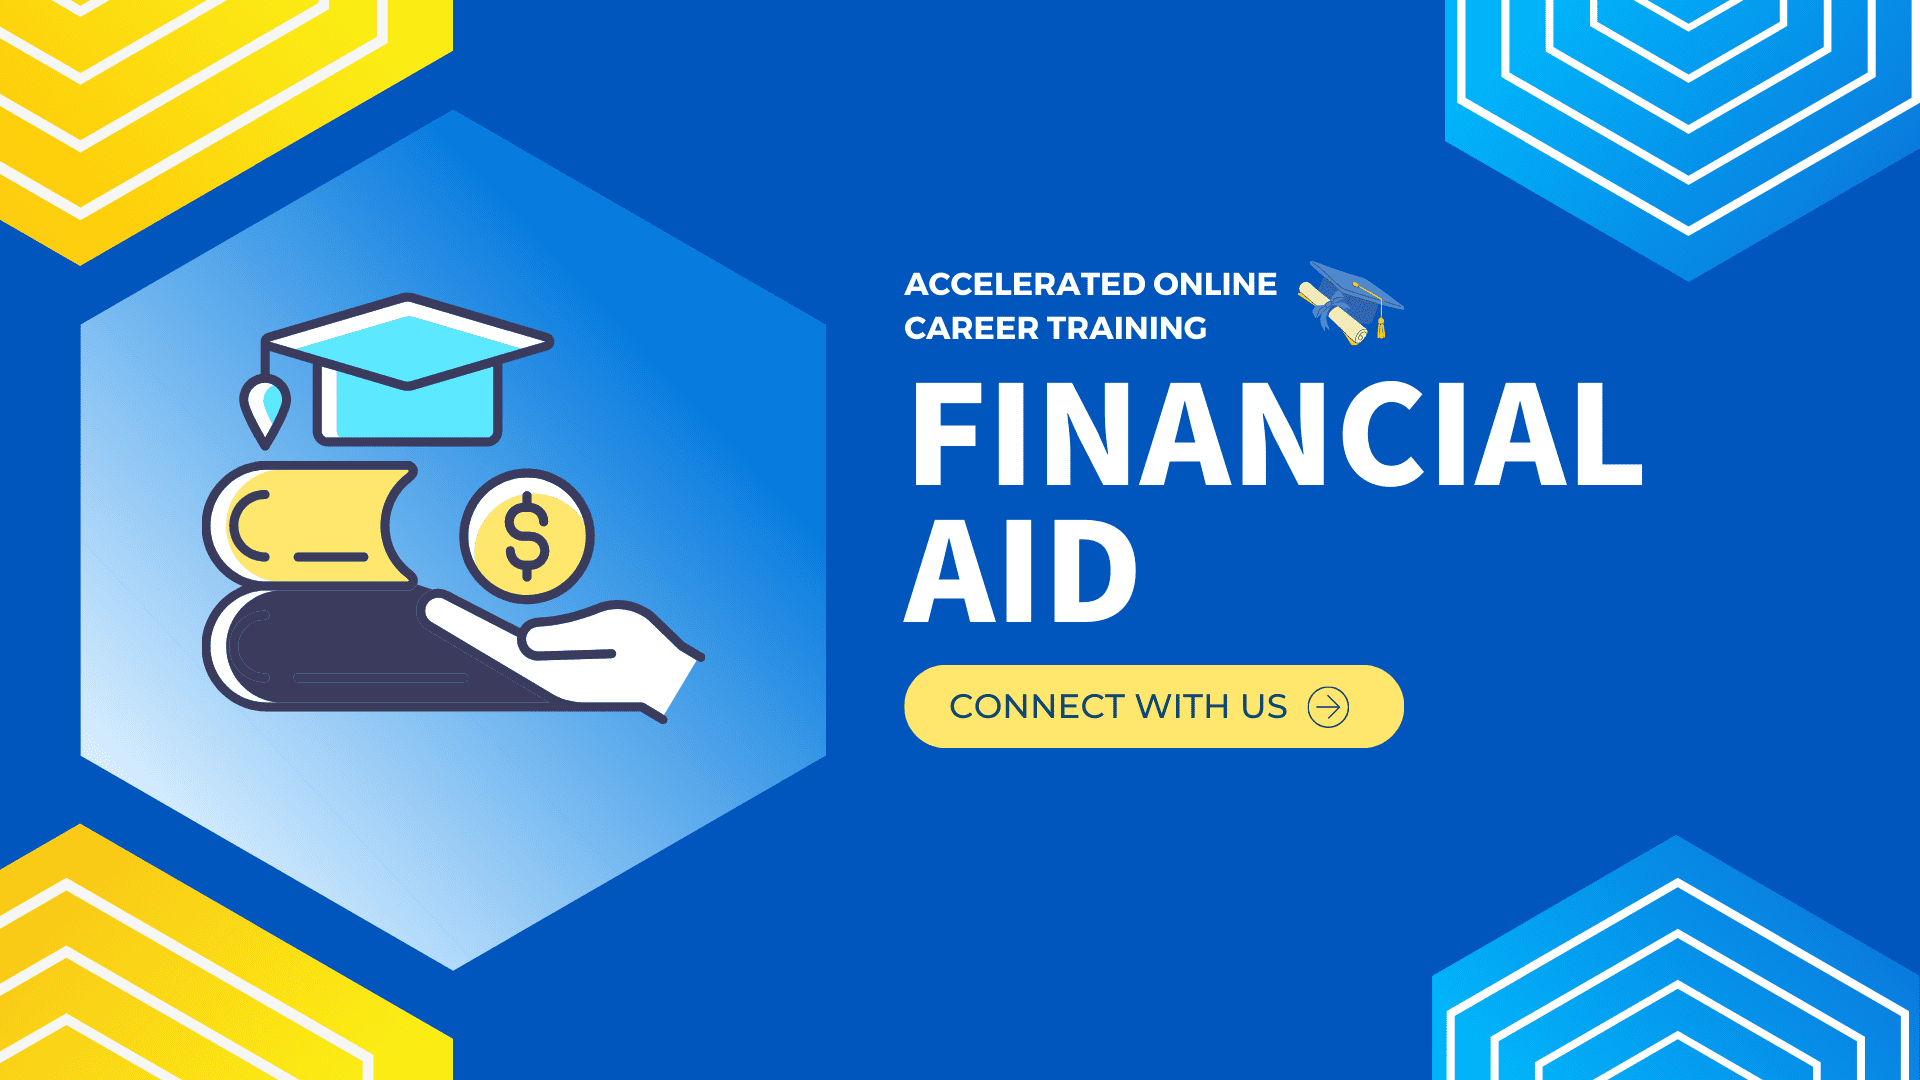 cci training center financial aid information